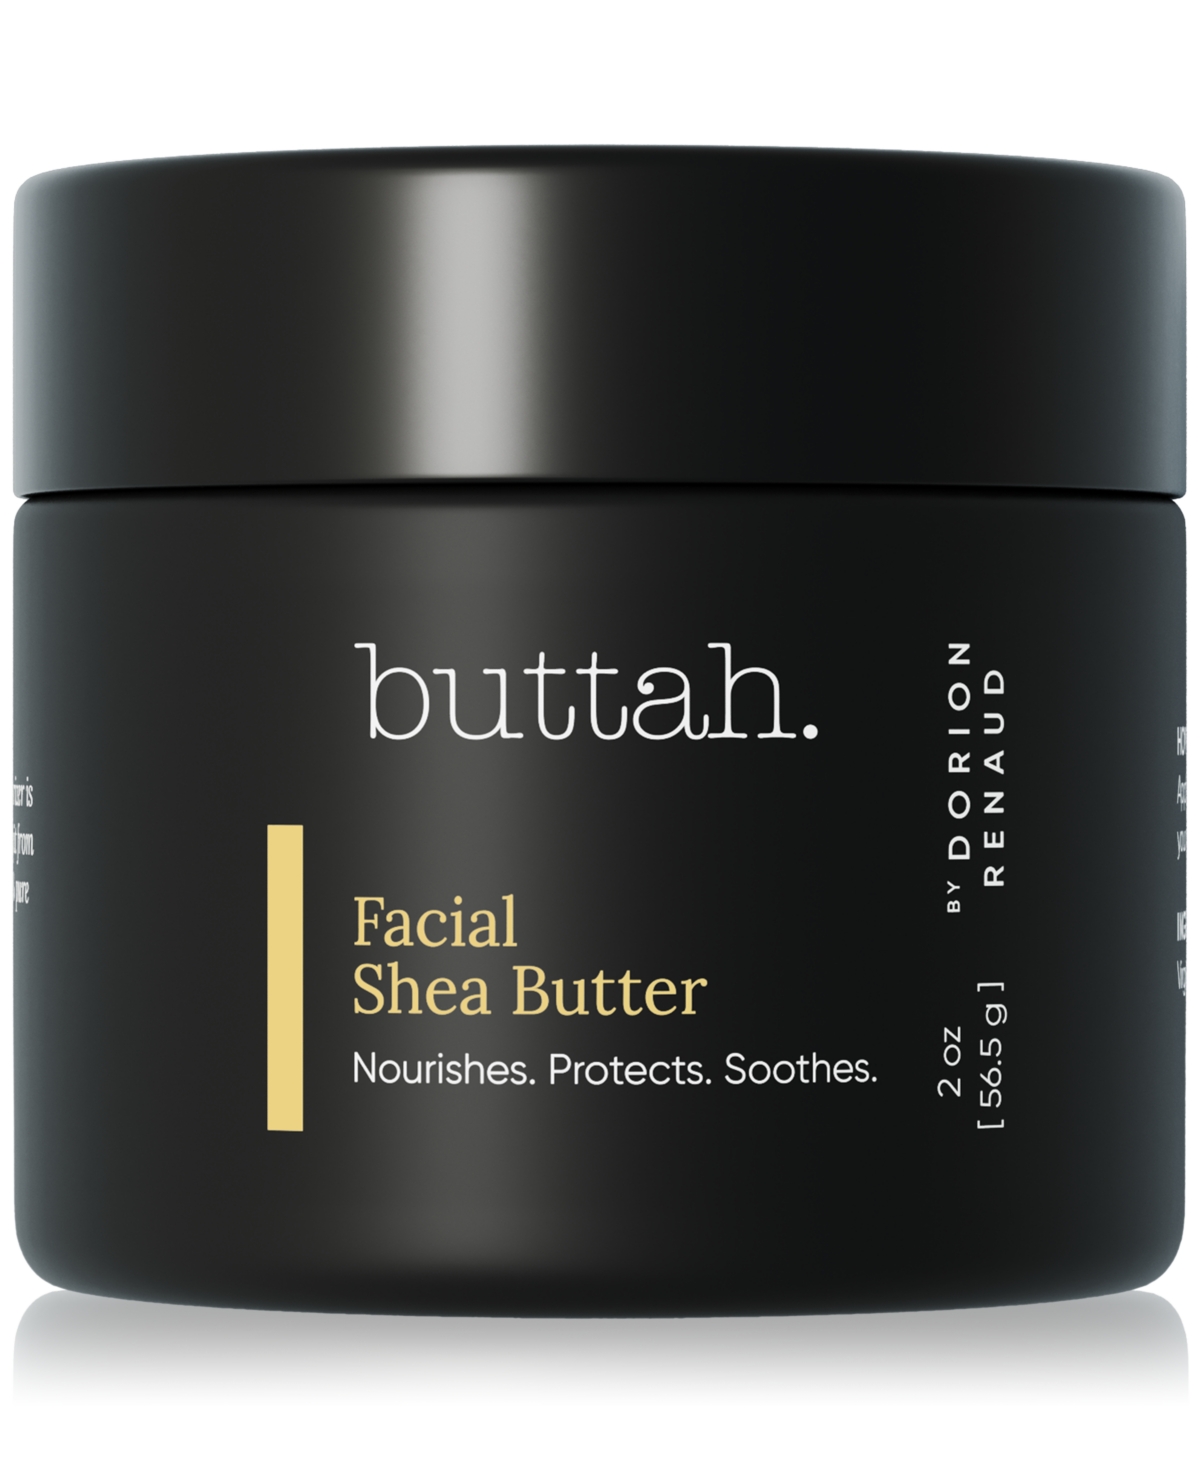 Facial Shea Butter, 2-oz. - Multi/none